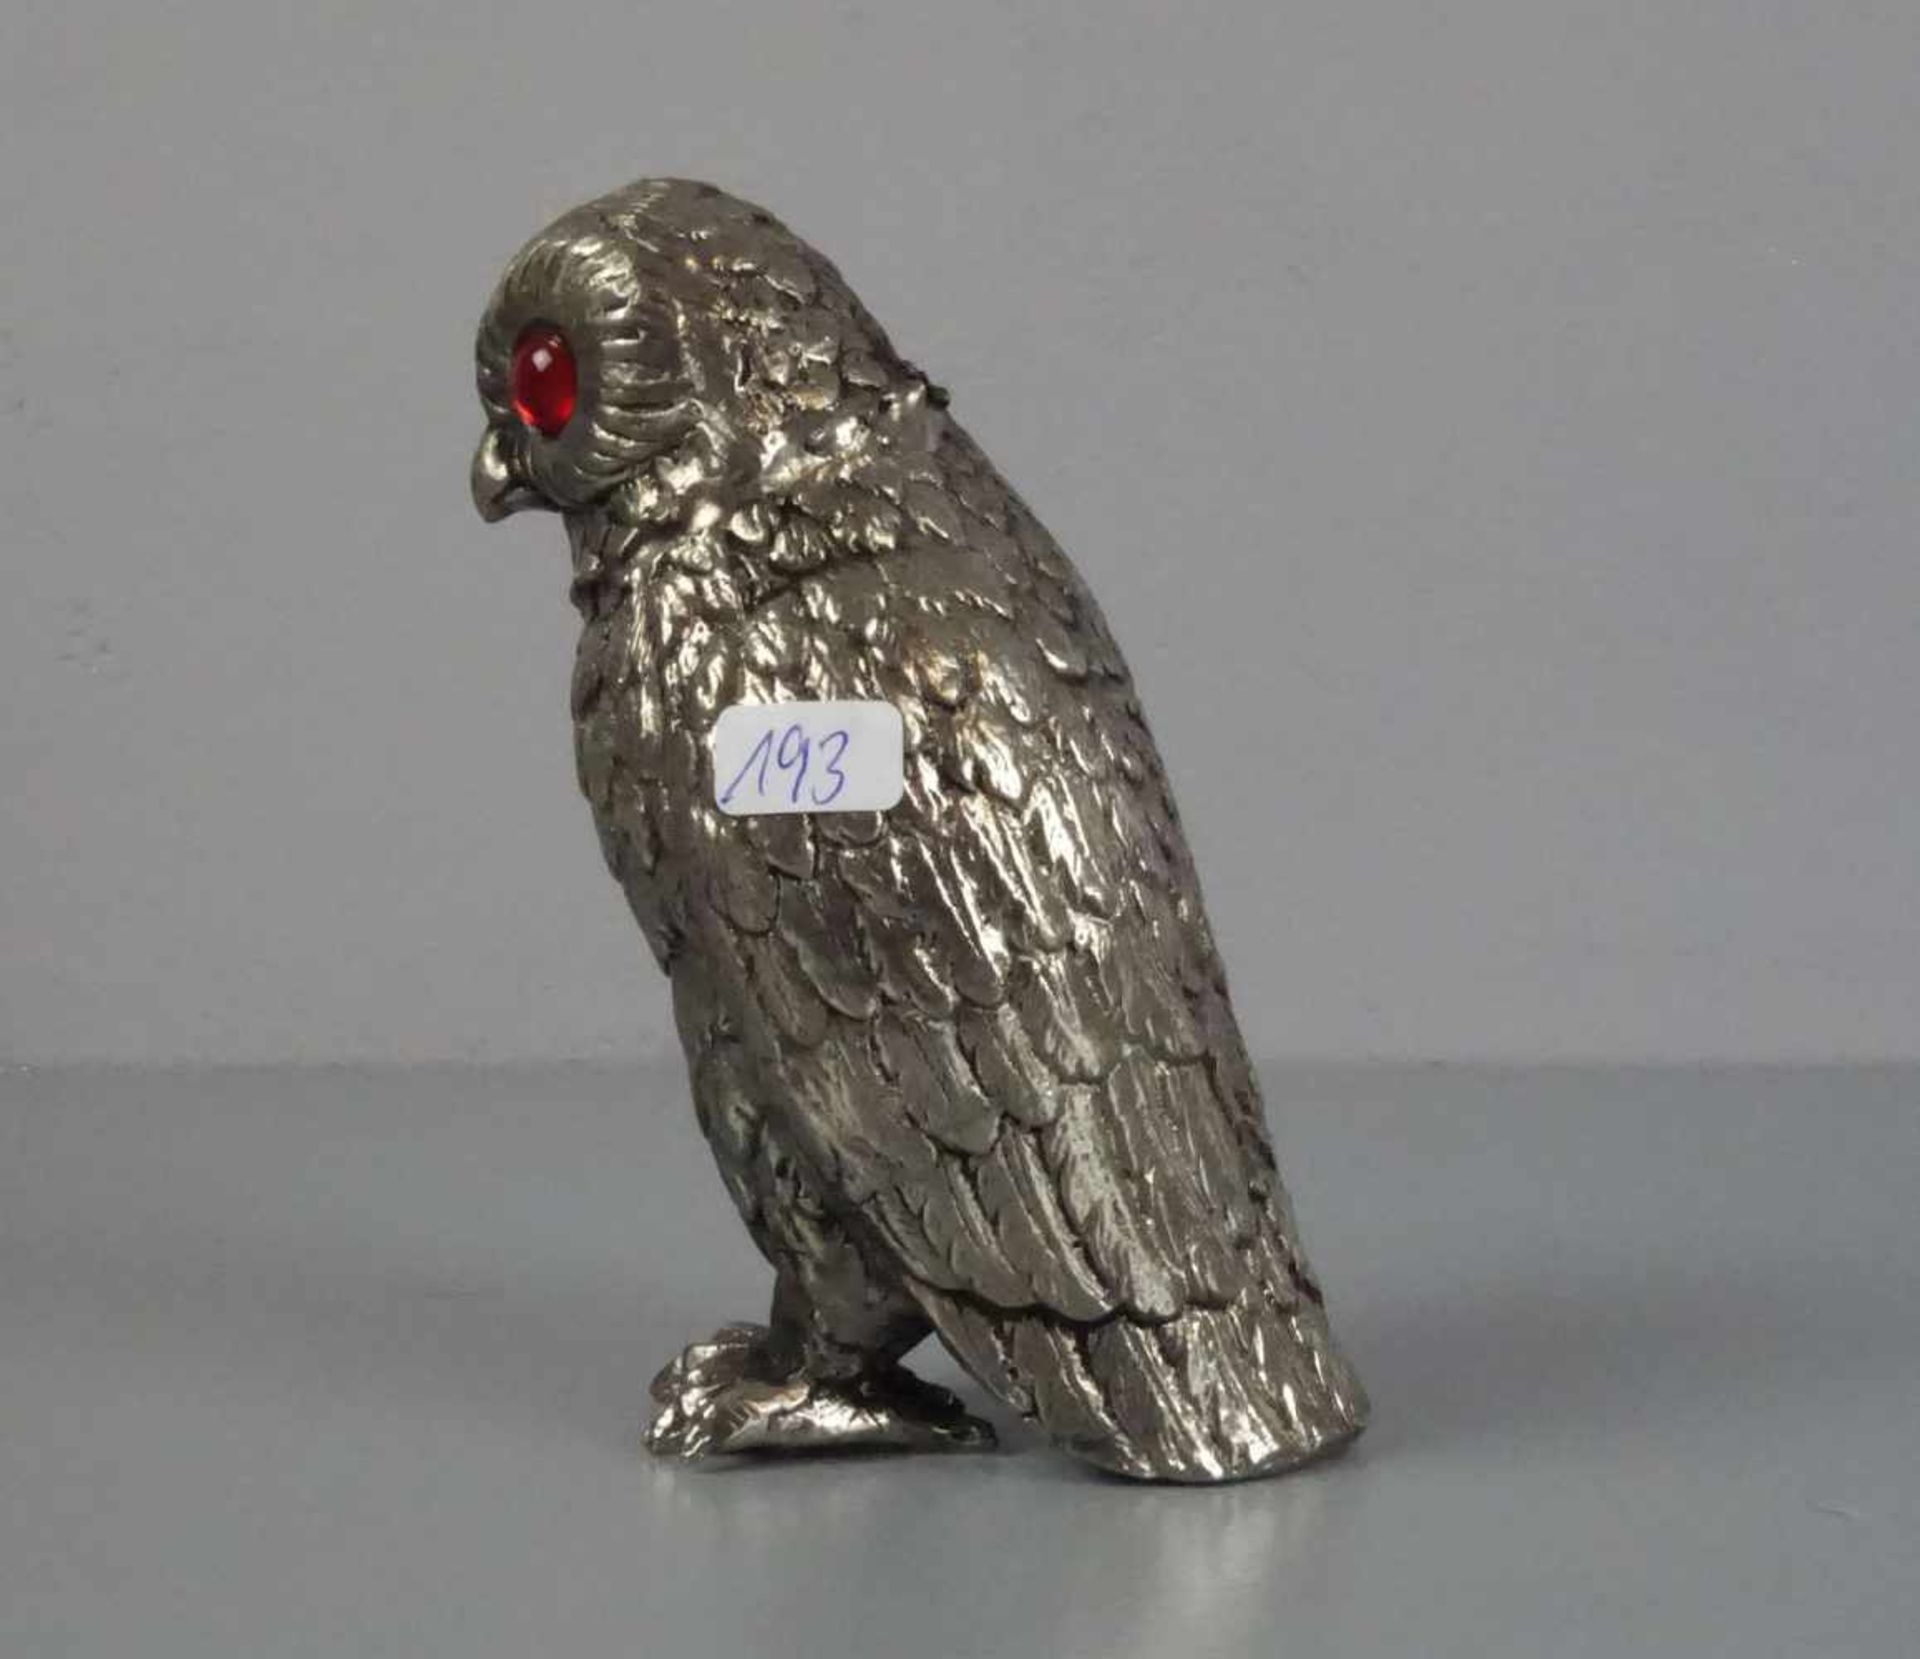 SKULPTUR "Eule" / metal owl sculpture, 20. Jh., silberfarbenes Metall mit roten Glasaugen, - Bild 2 aus 4